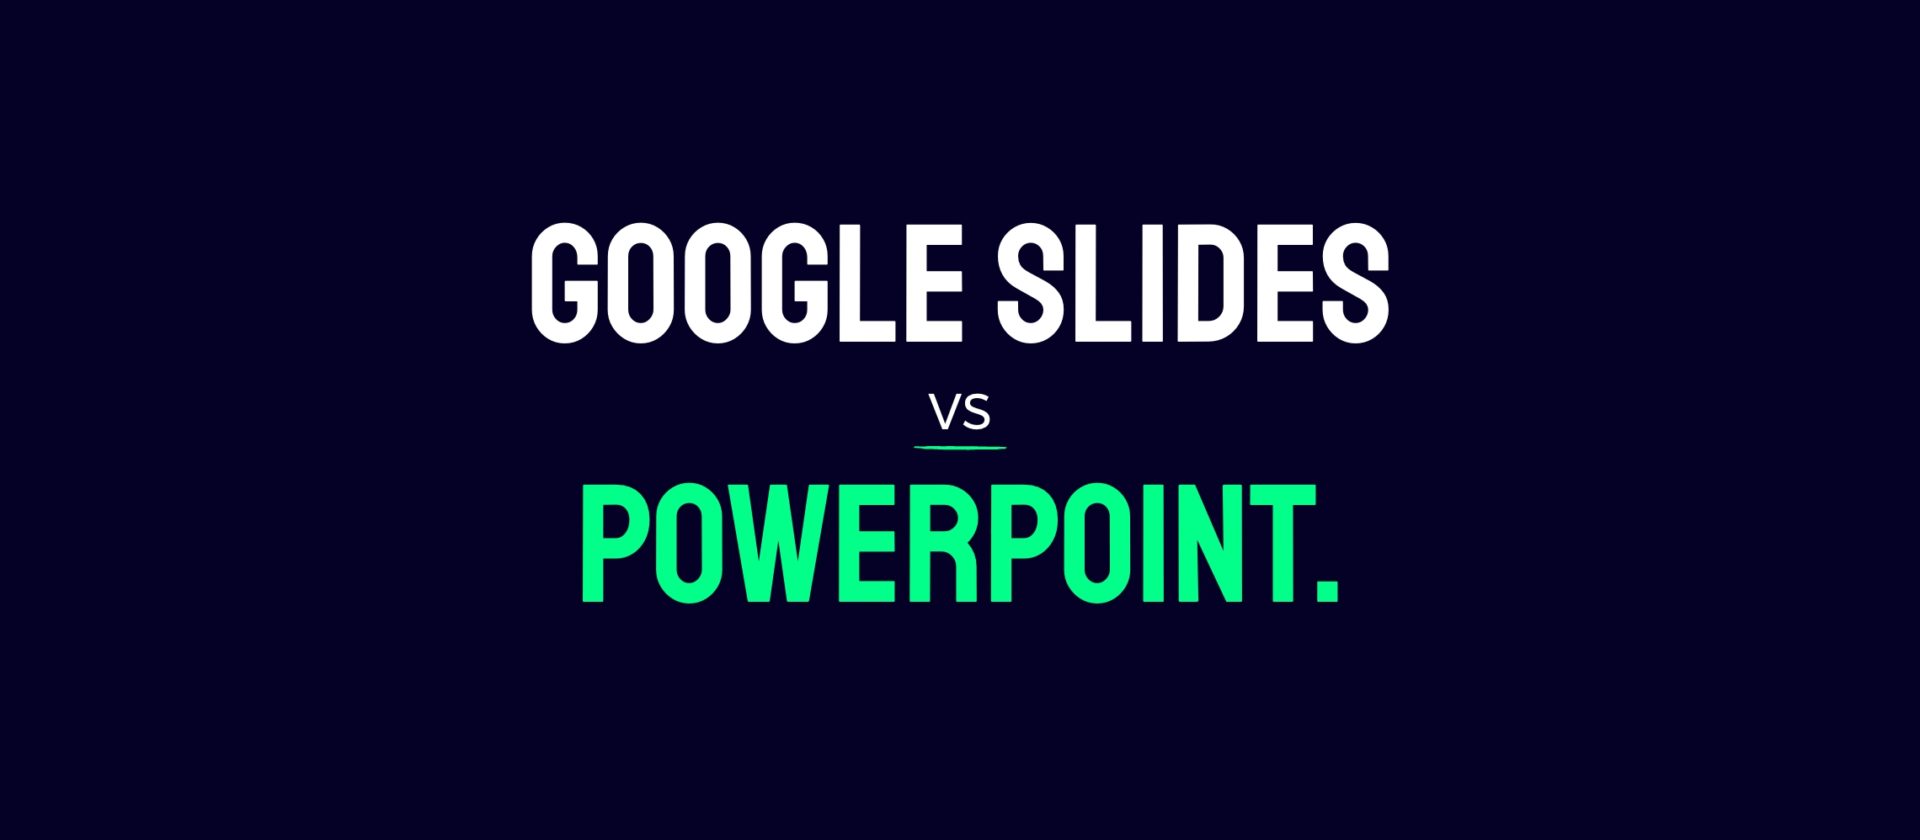 Order! Order! Case number B7 – Google Slides vs PowerPoint.